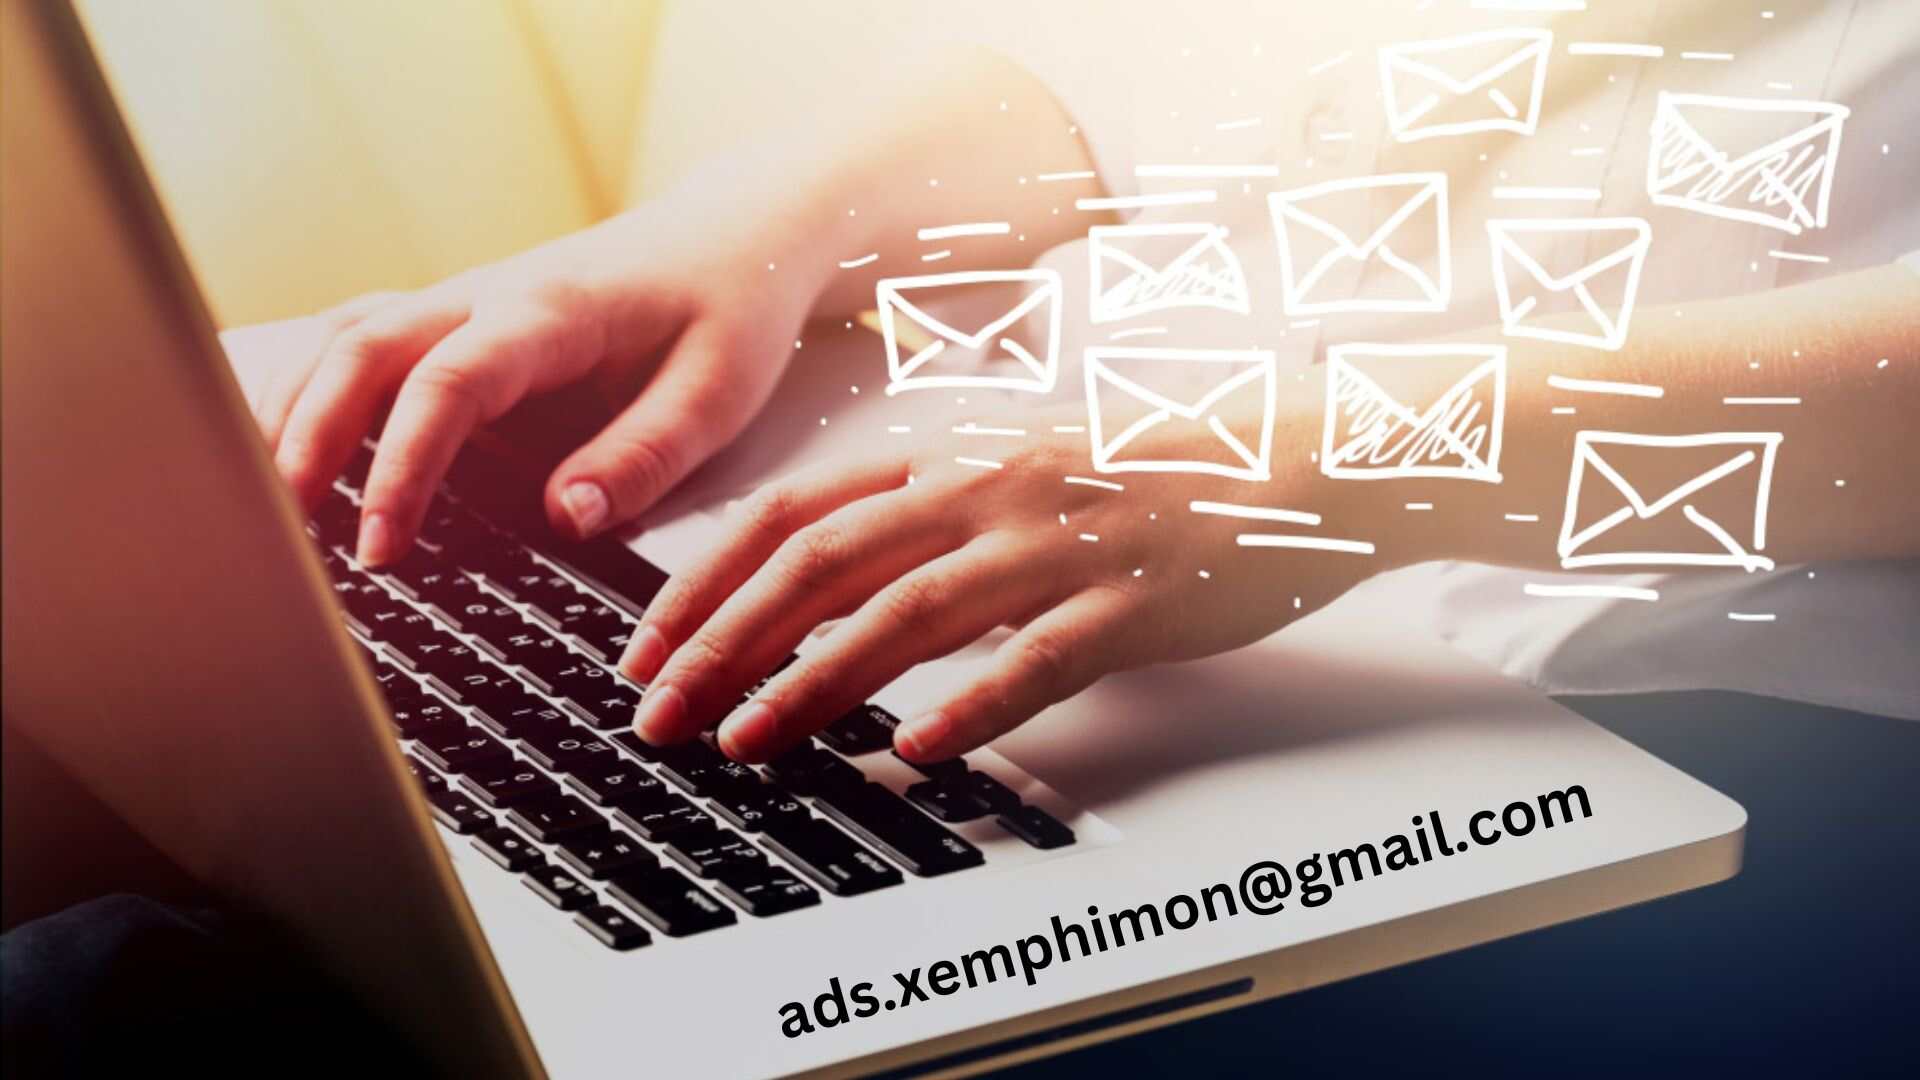 Using ads.xemphimon@gmail.com to Serve Online Marketing Needs